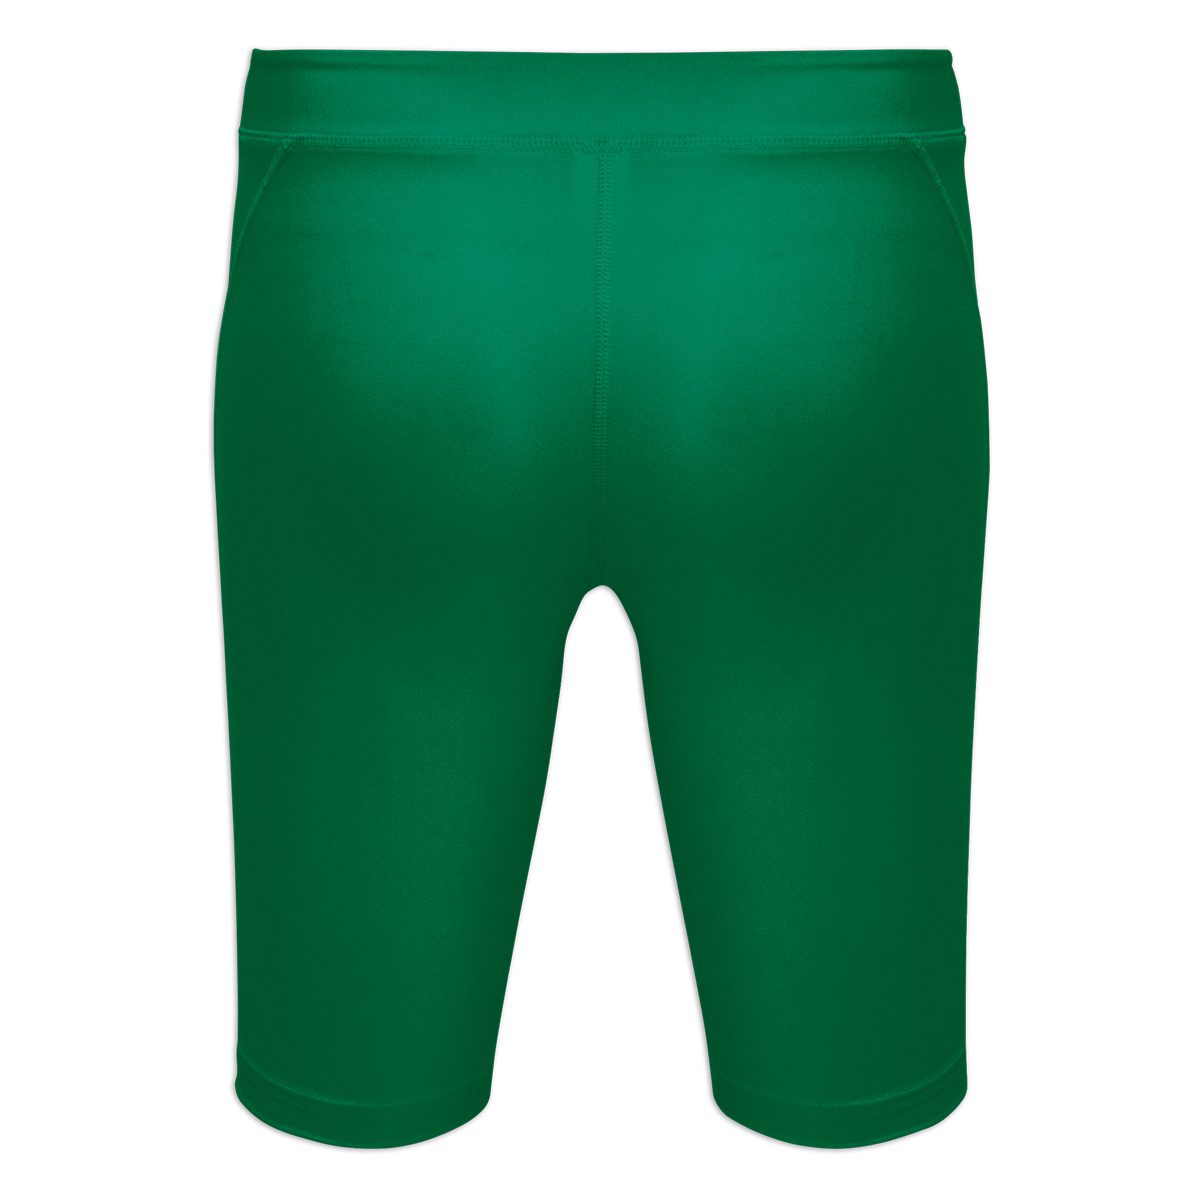 Women's Compression Shorts - Emerald Green - Blackchrome